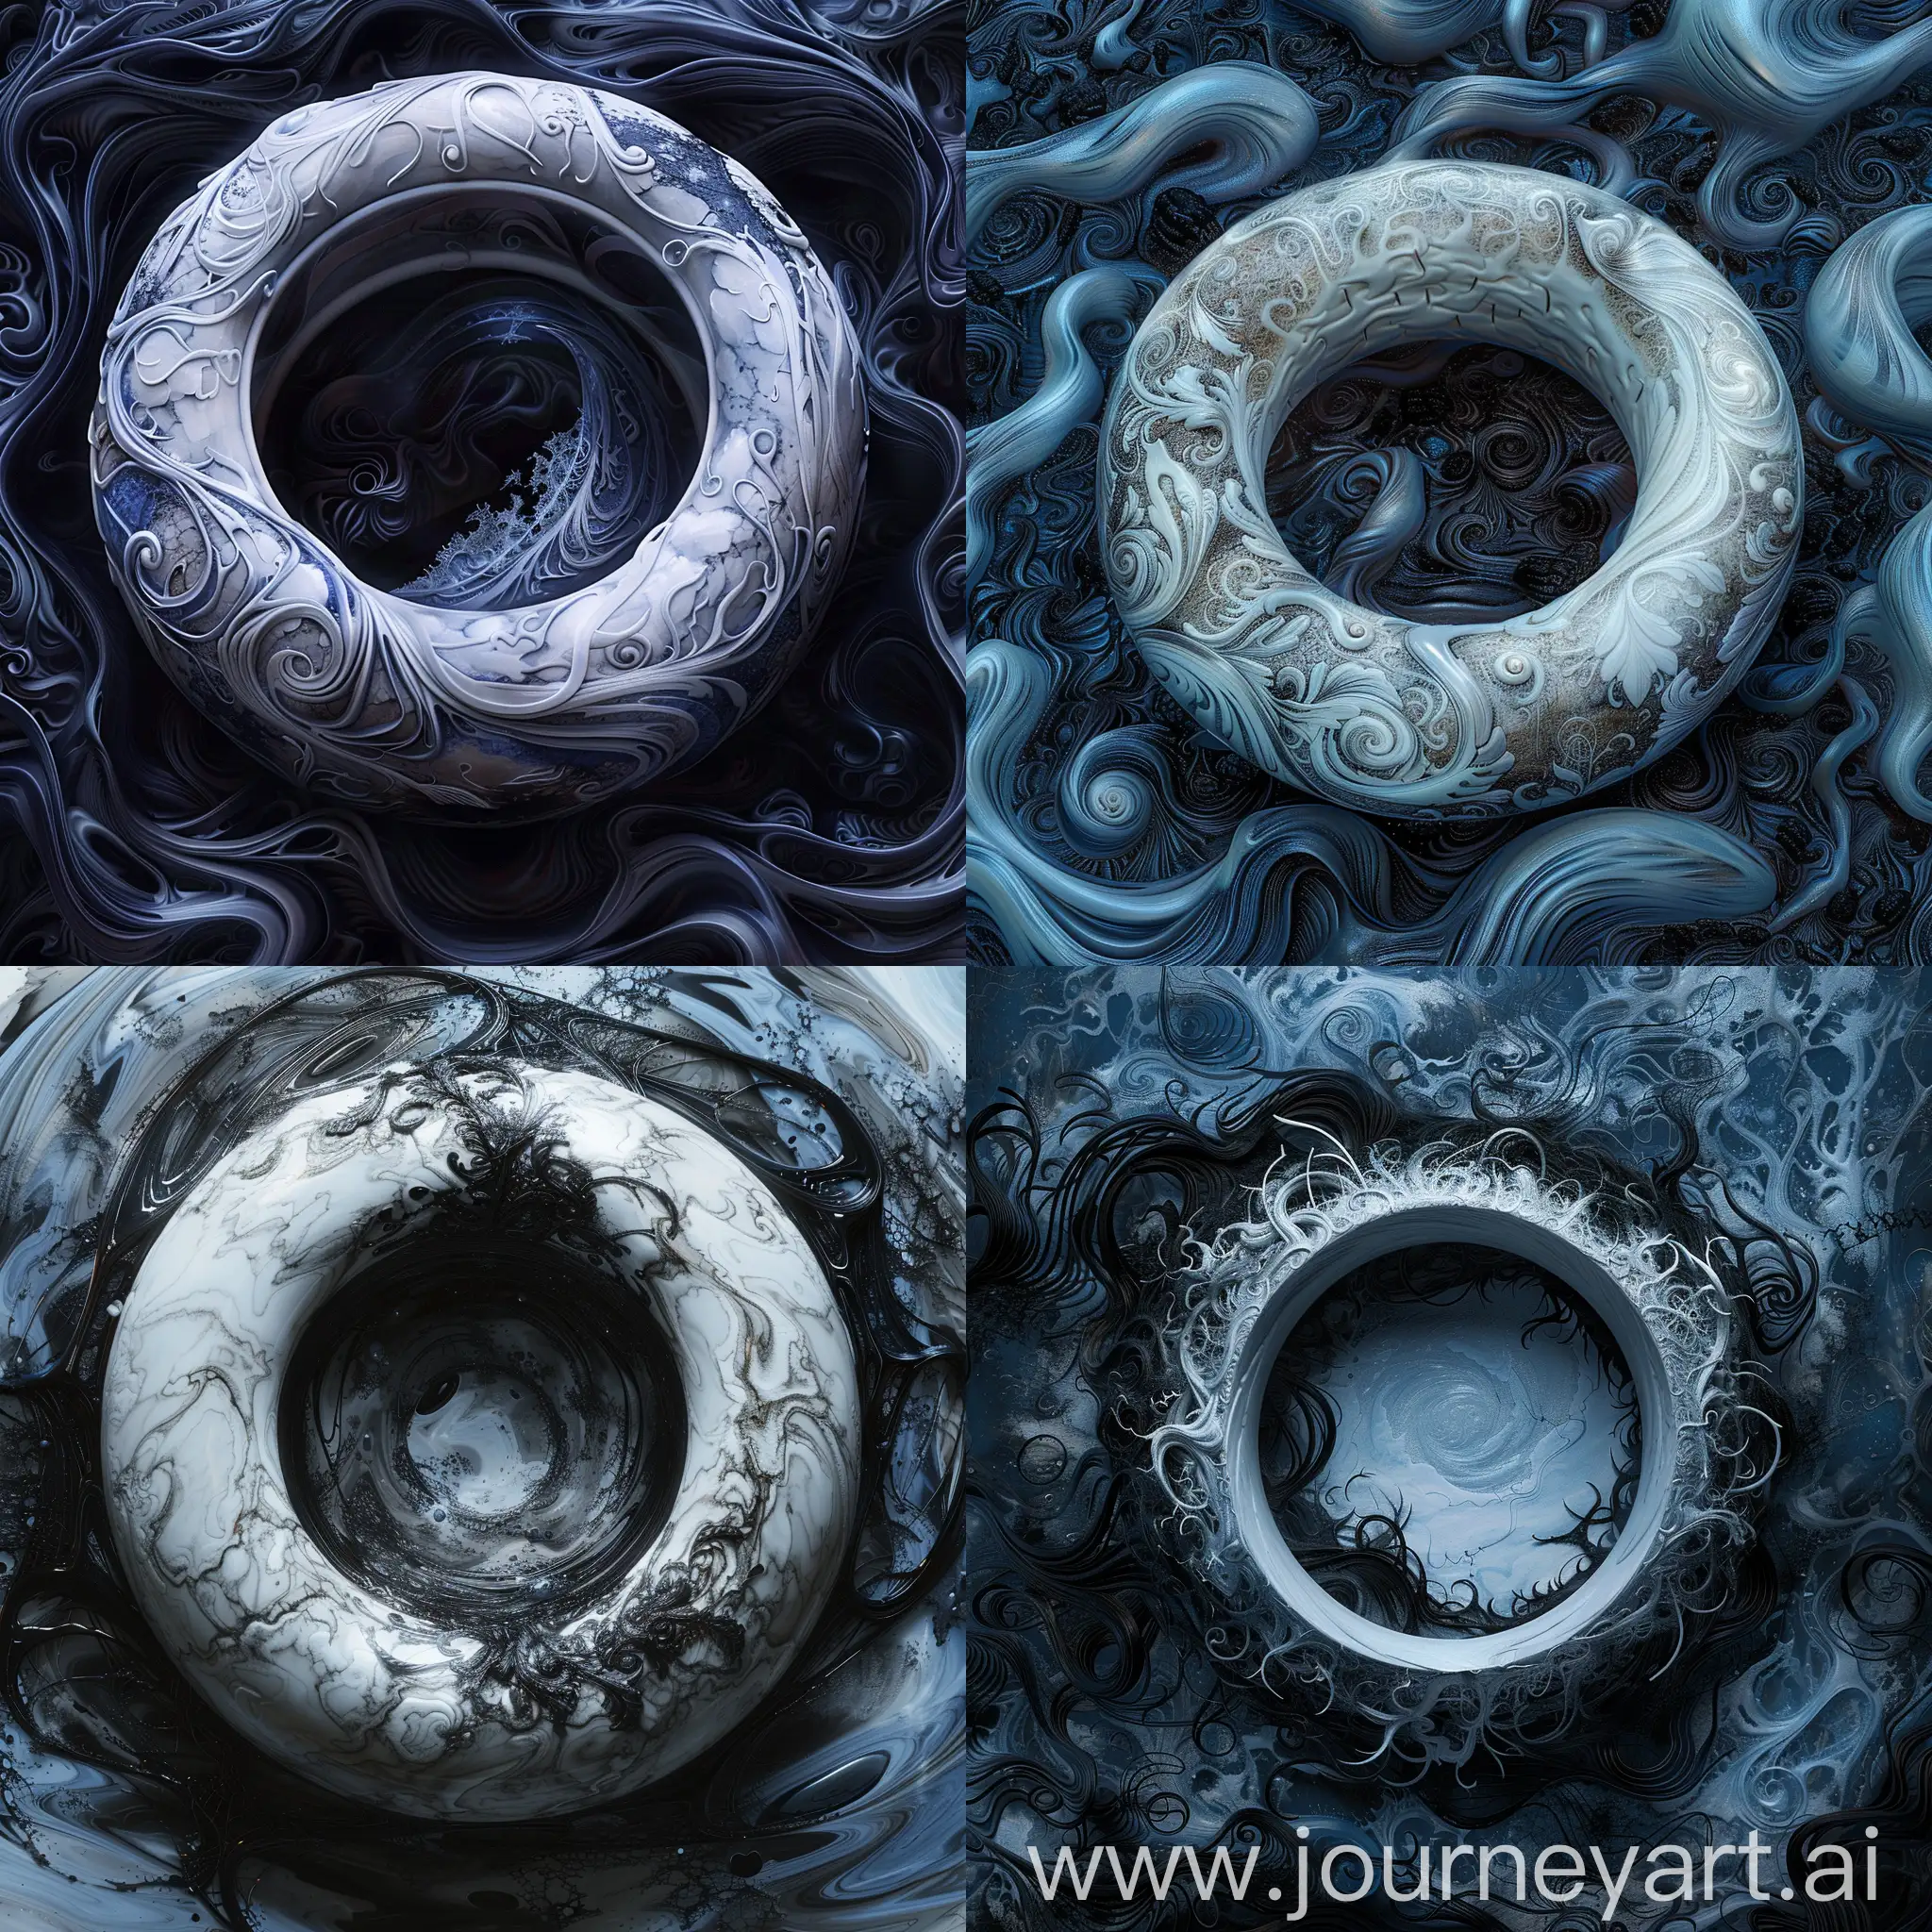 Mystical-Heros-Journey-Realistic-White-Ring-Amidst-Dark-Swirls-with-Symbols-of-Struggle-and-Sacrifice